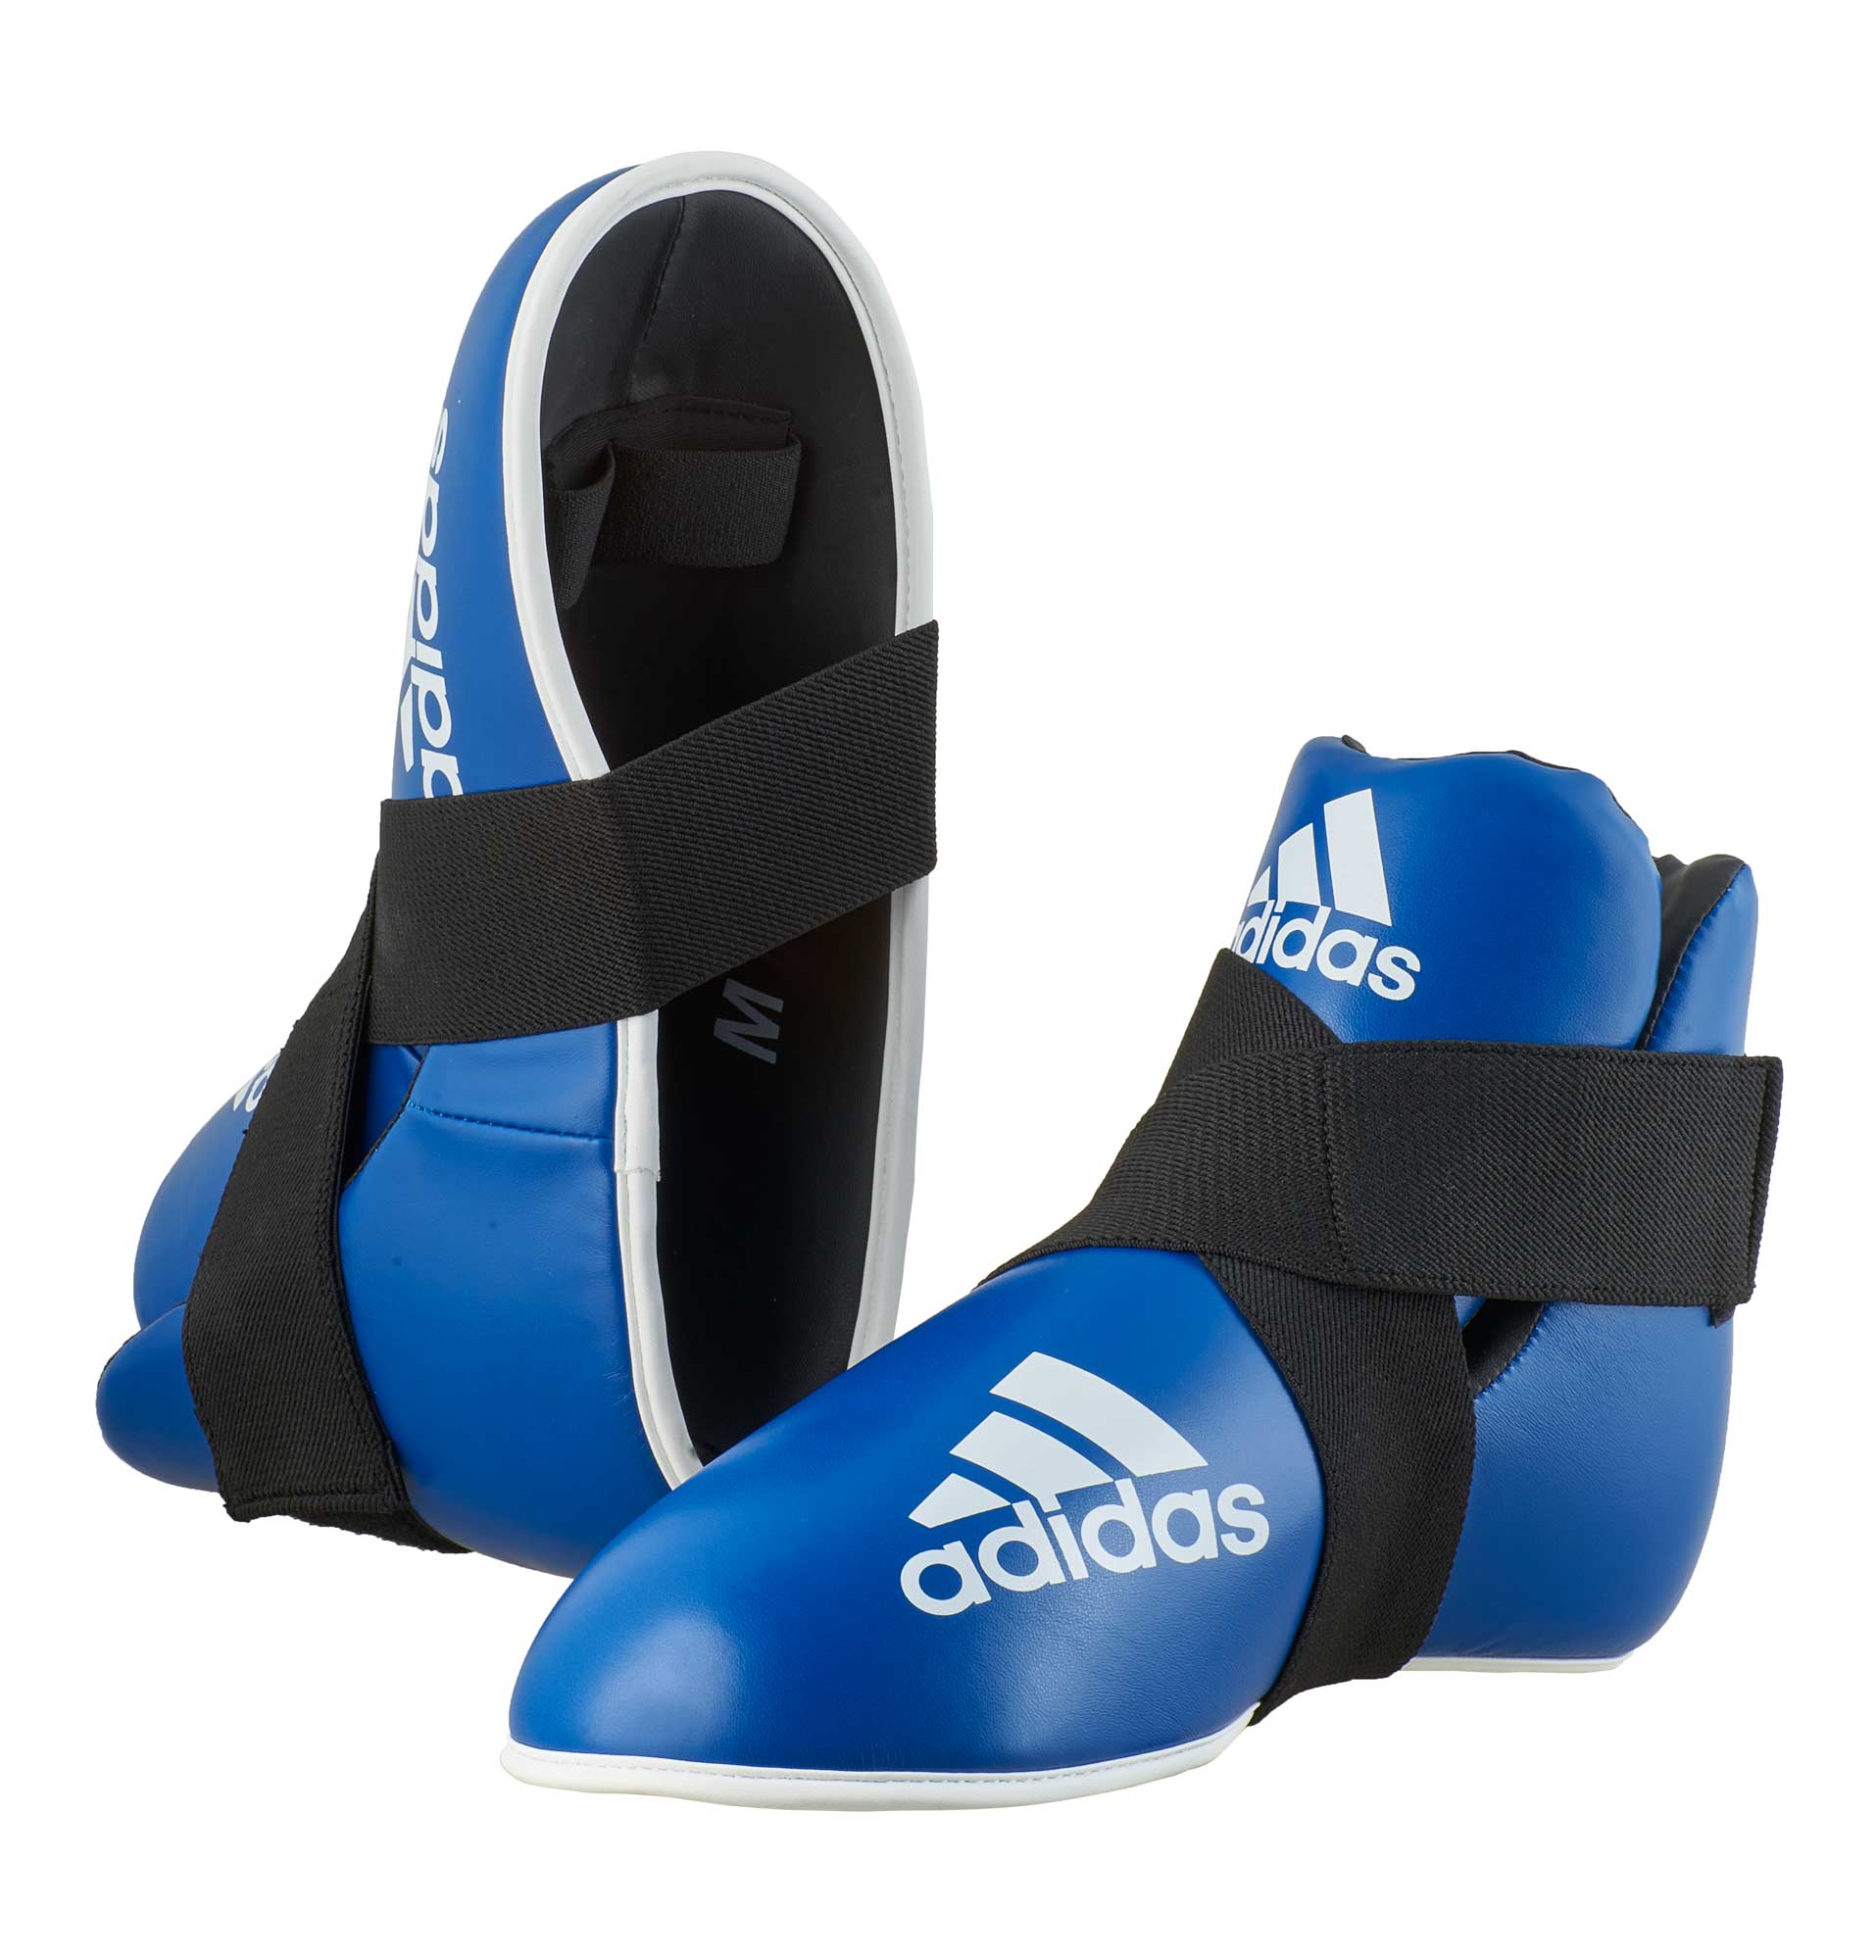 adidas Super Safety Kicks adiKBB100 blue